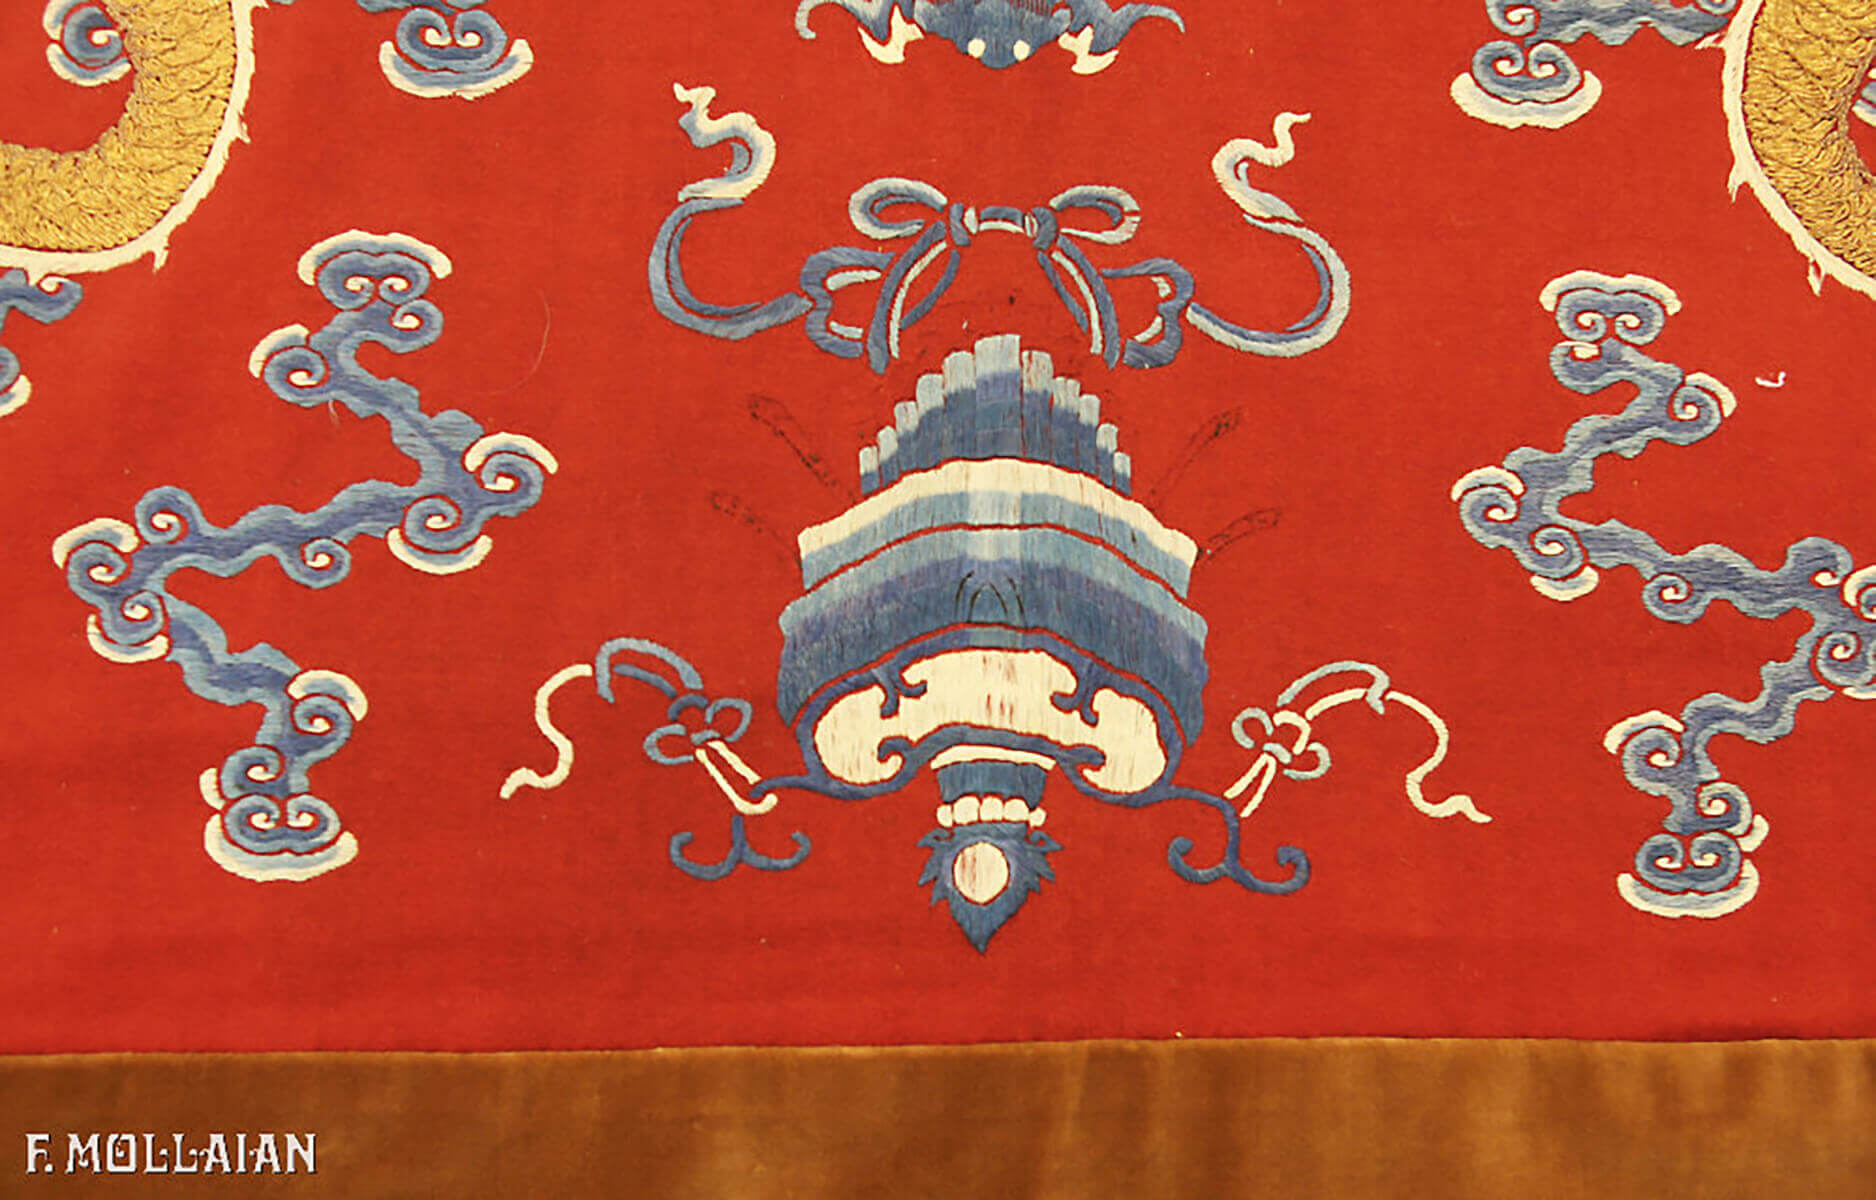 Têxtil Chinês Antigo (Seda & Metal) n°:87635740